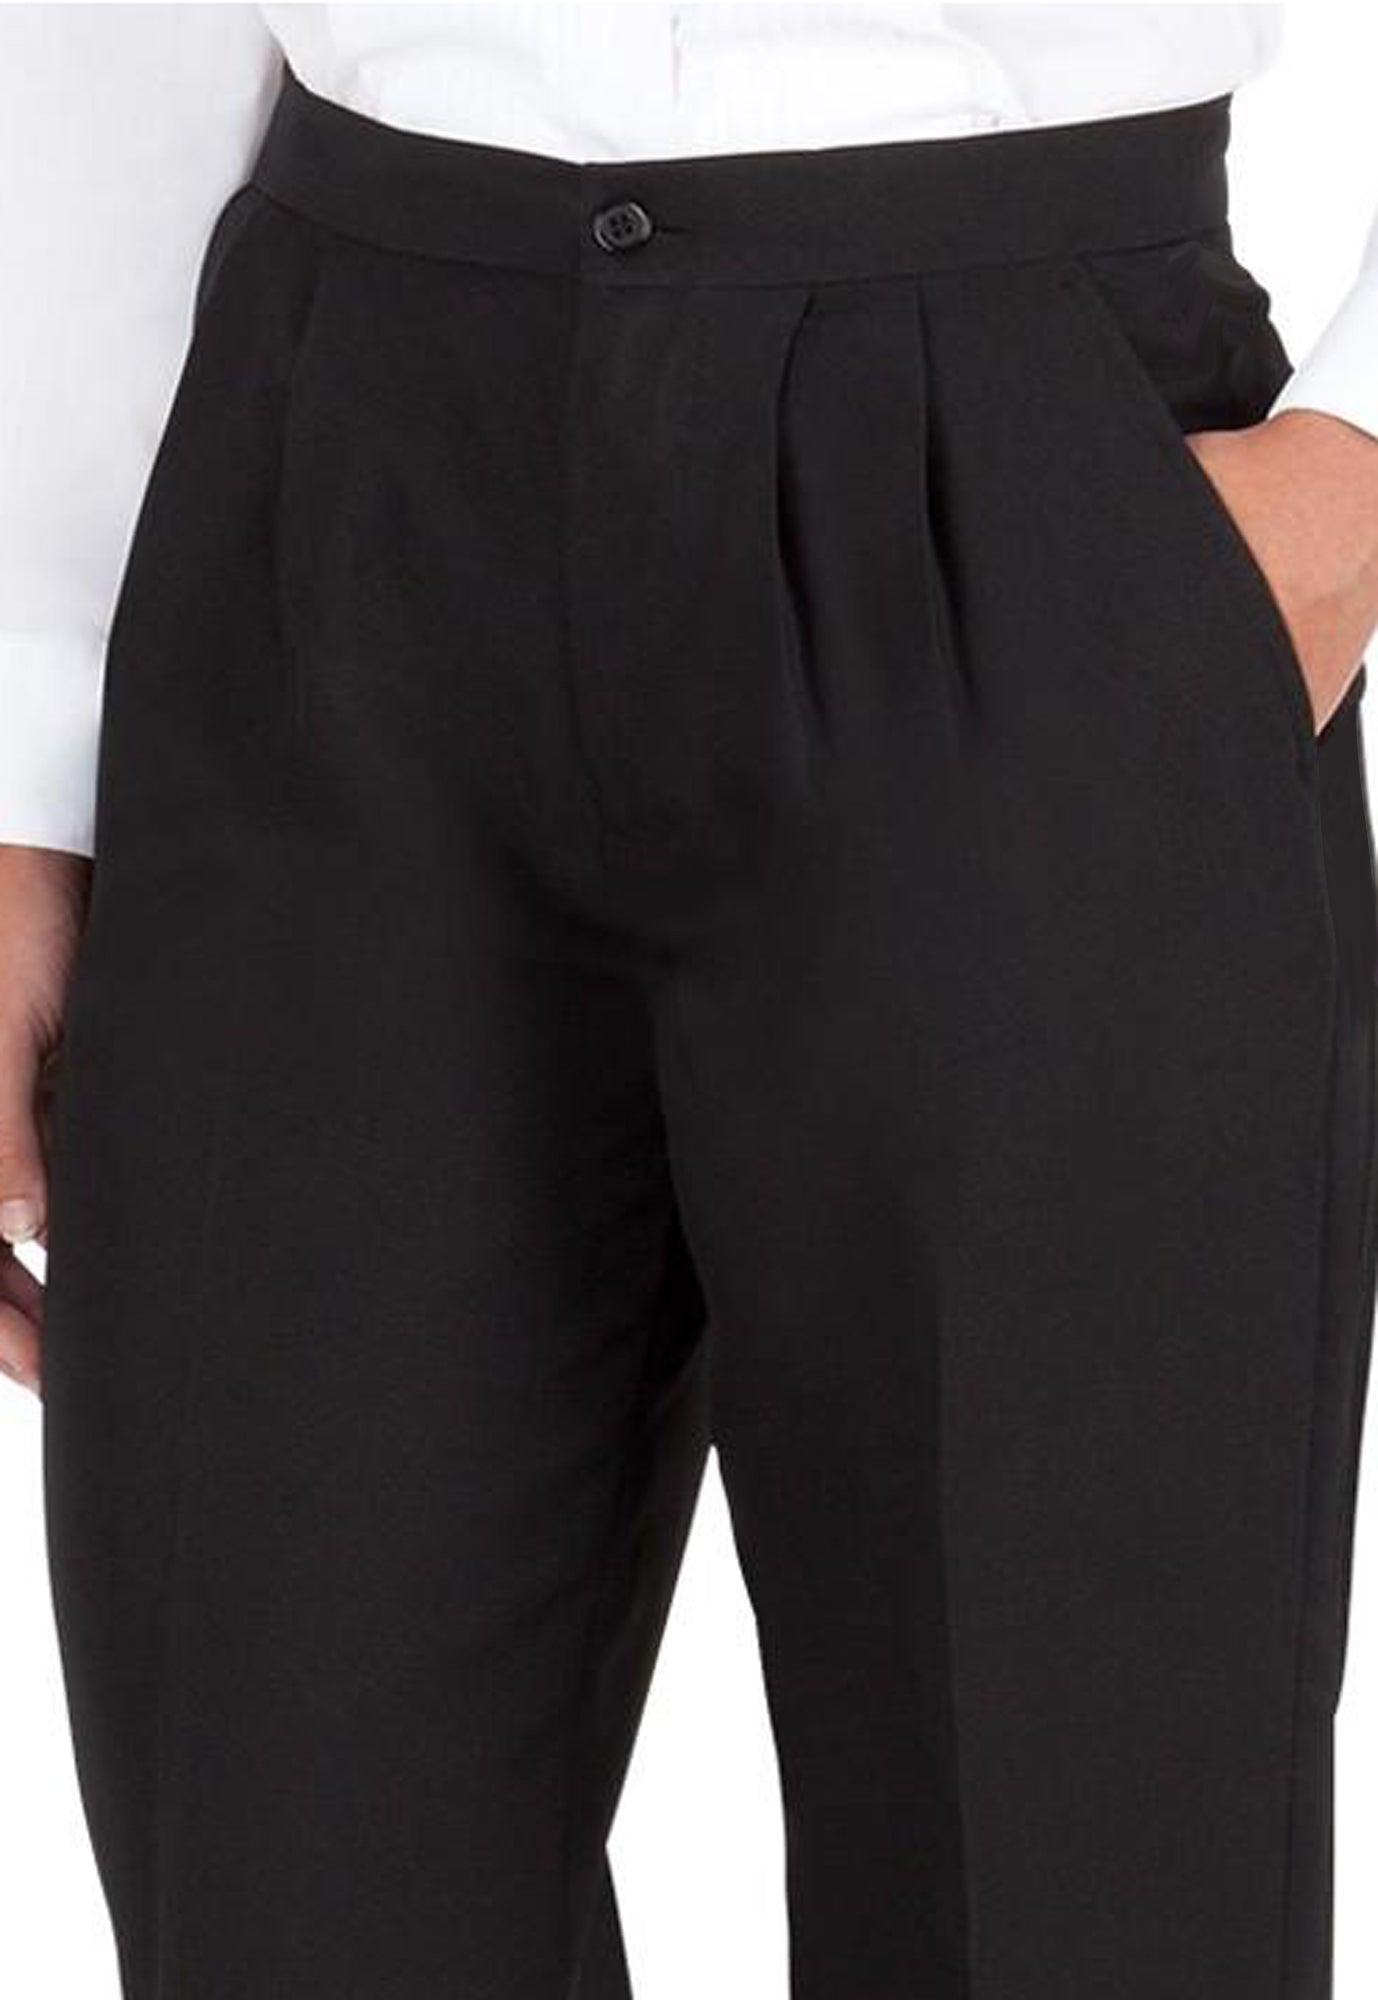 Black high waisted flat-front stretch Dress Pants